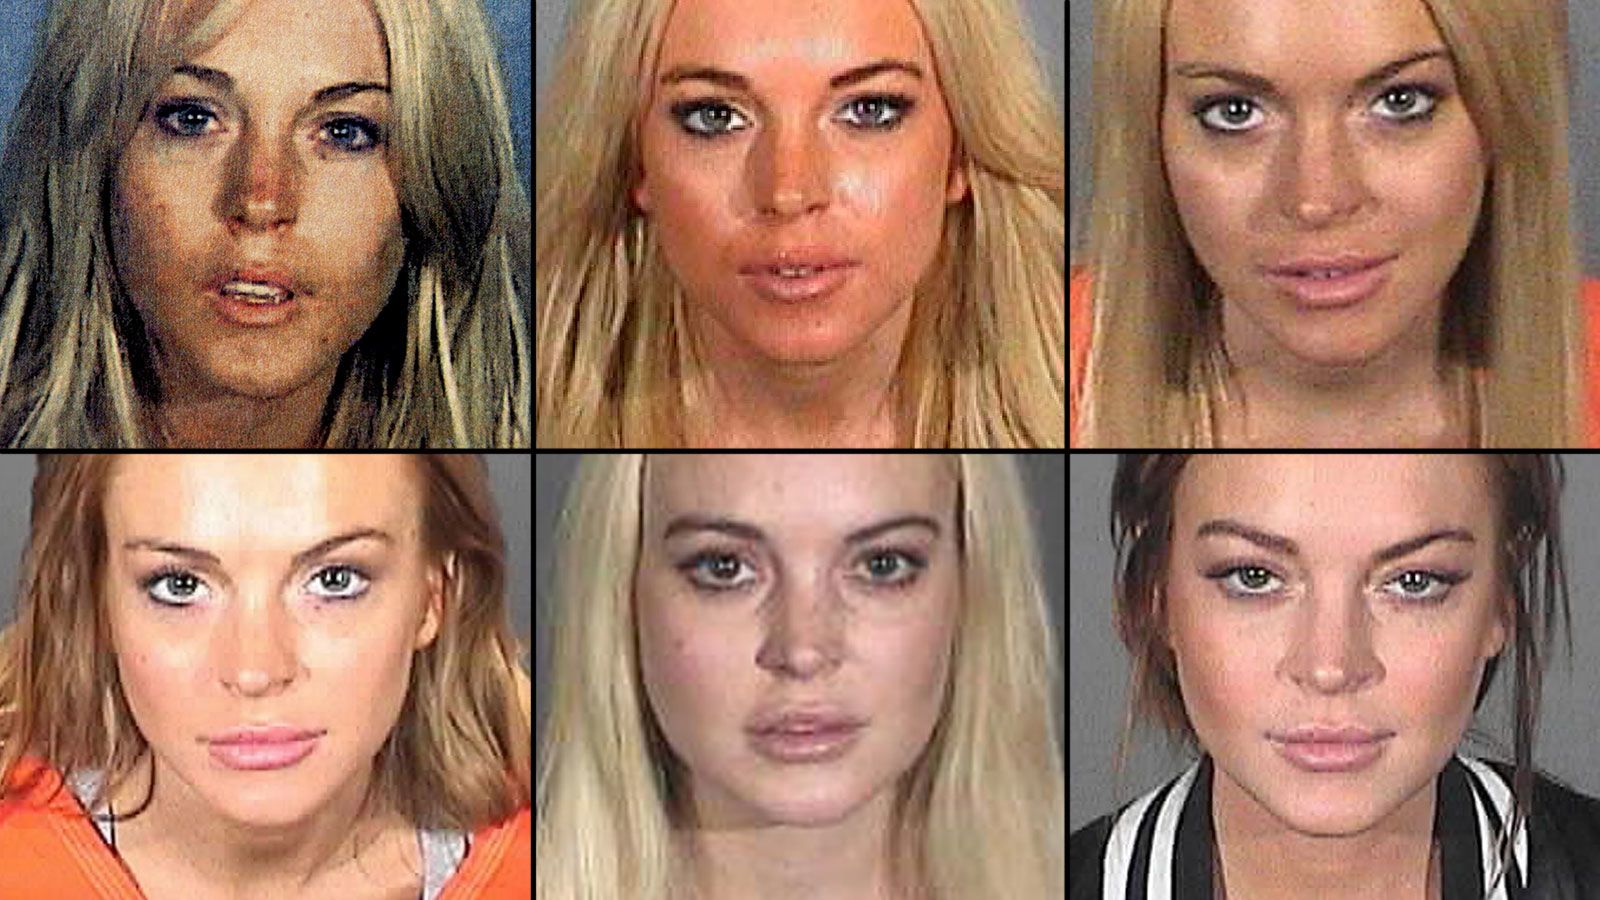 Erect Couples Nudism Pagent - Lindsay Lohan talks drugs, booze, rehab, sex | CNN